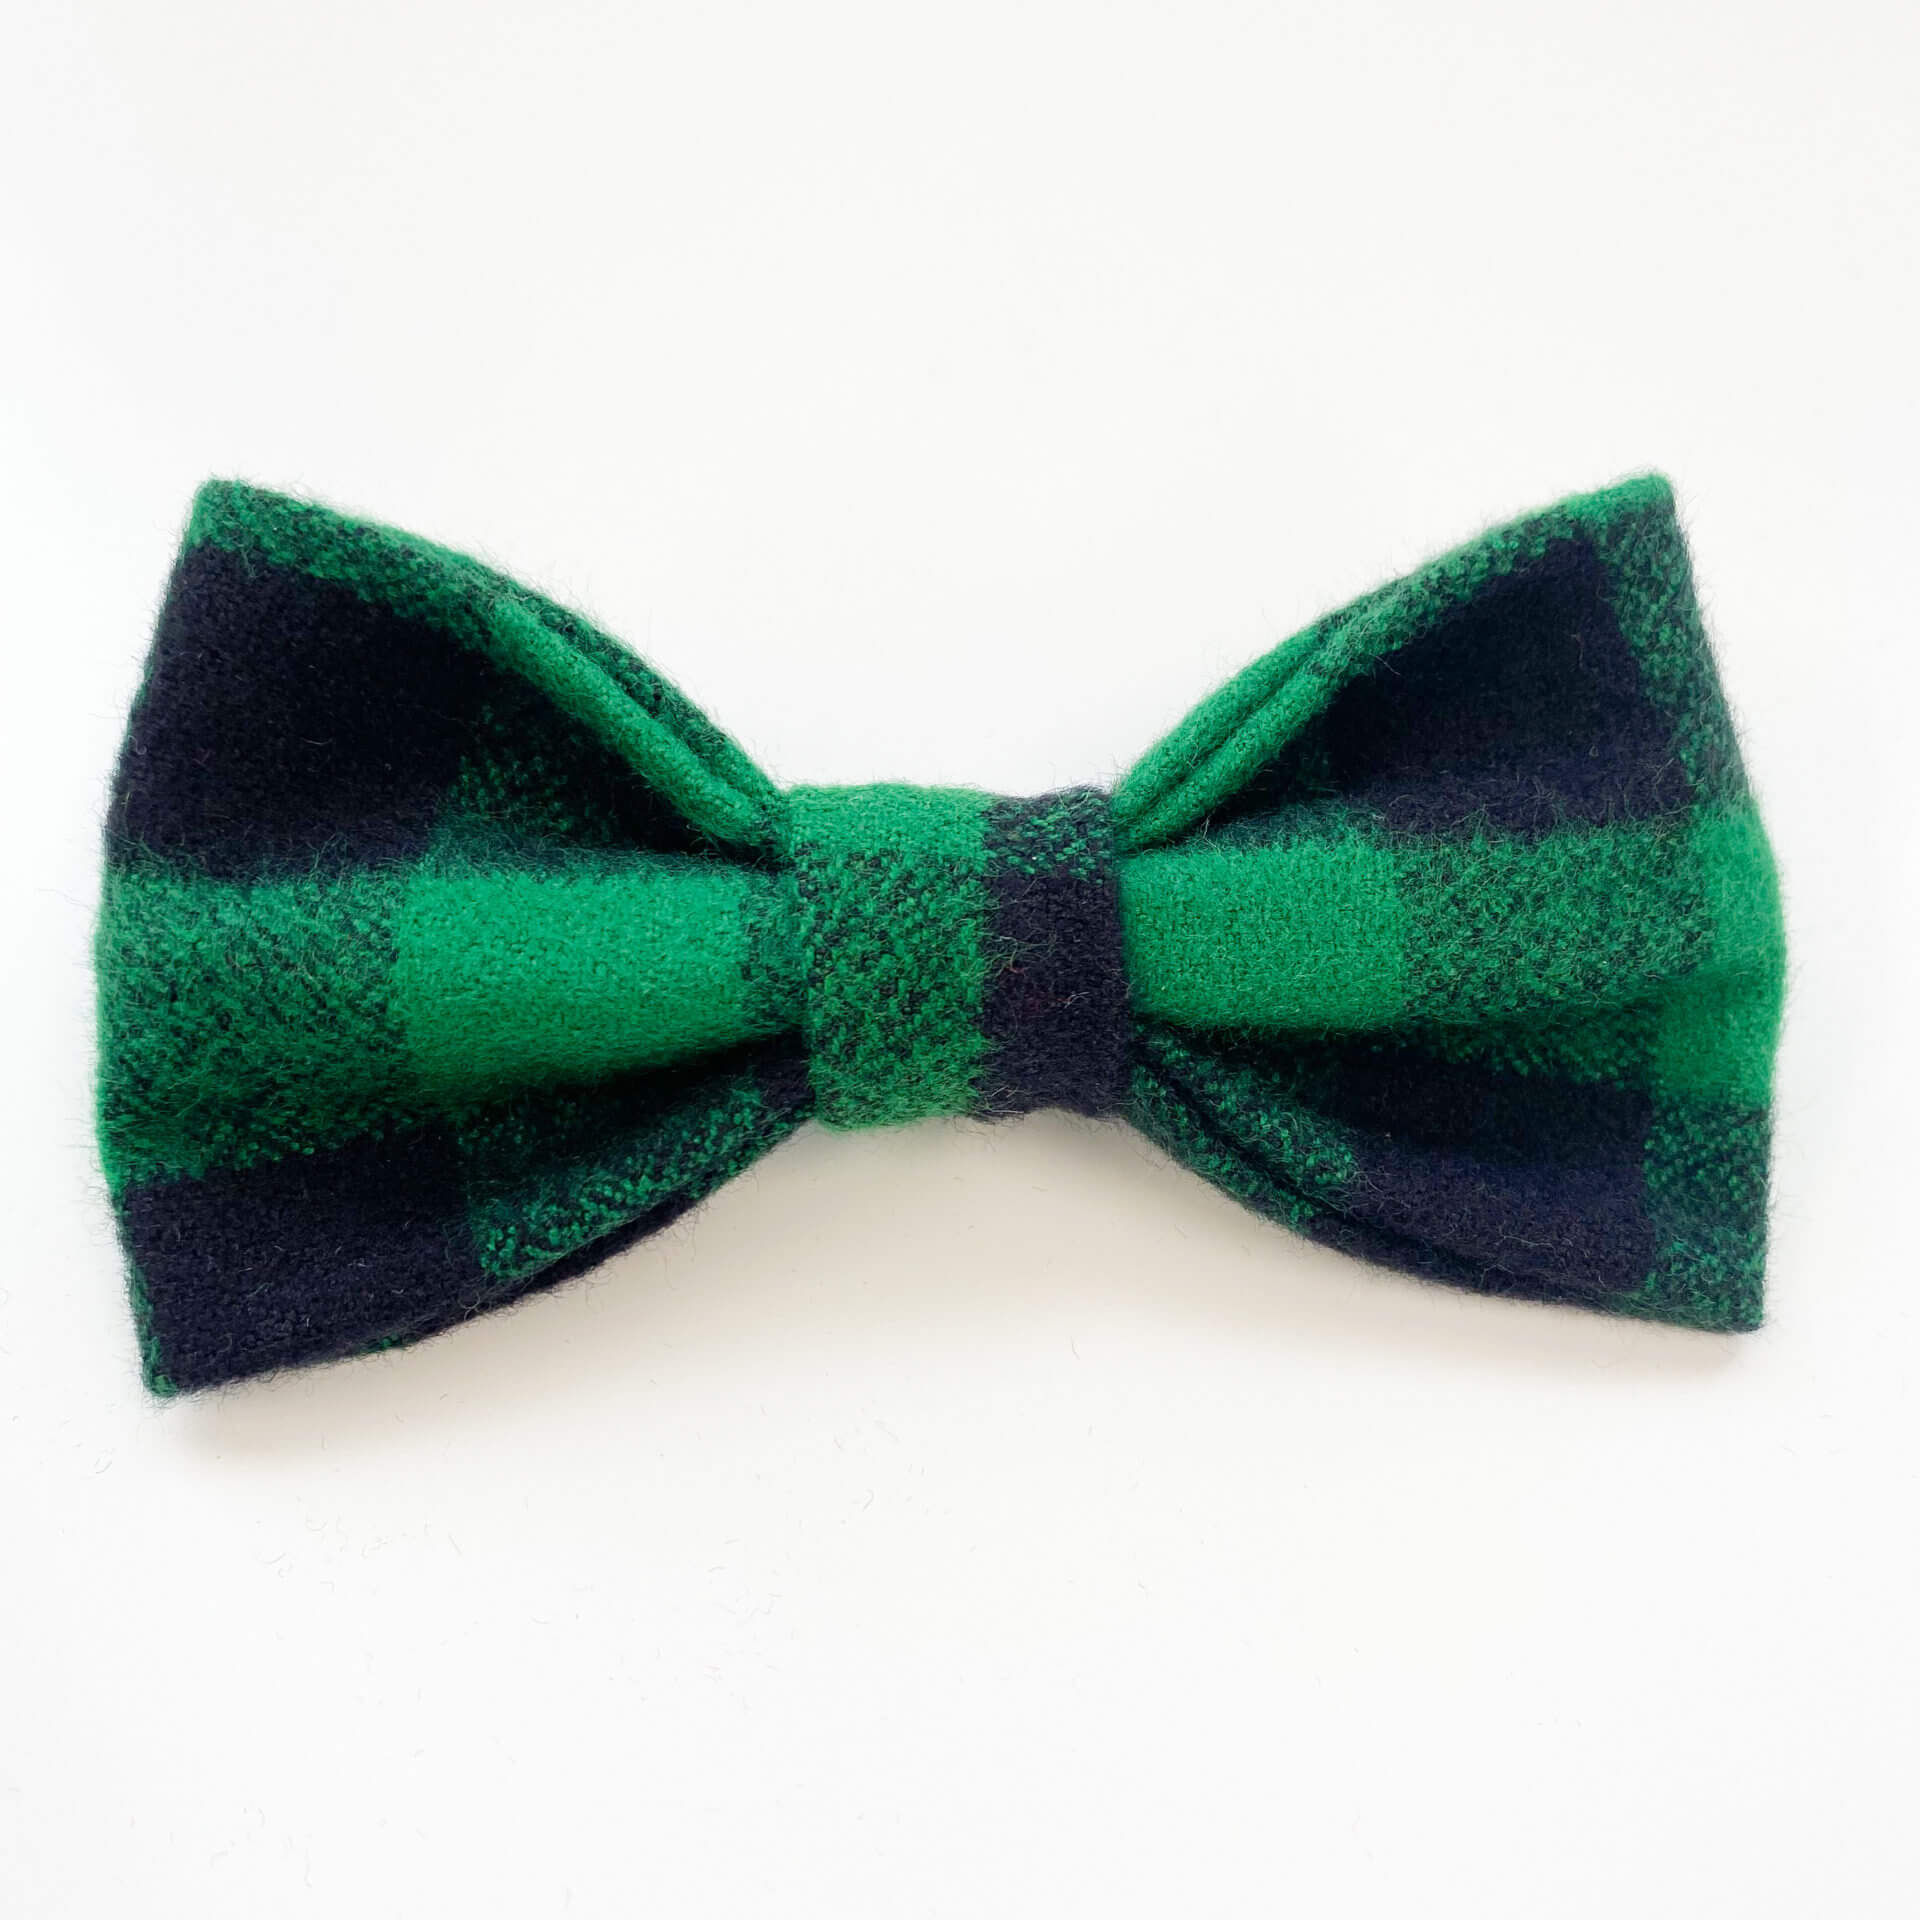 Bow Collar Accessories Collar Add On Bowtie Black Green Buffalo Plaid Flannel Bow Bow Tie Collar Slide On 